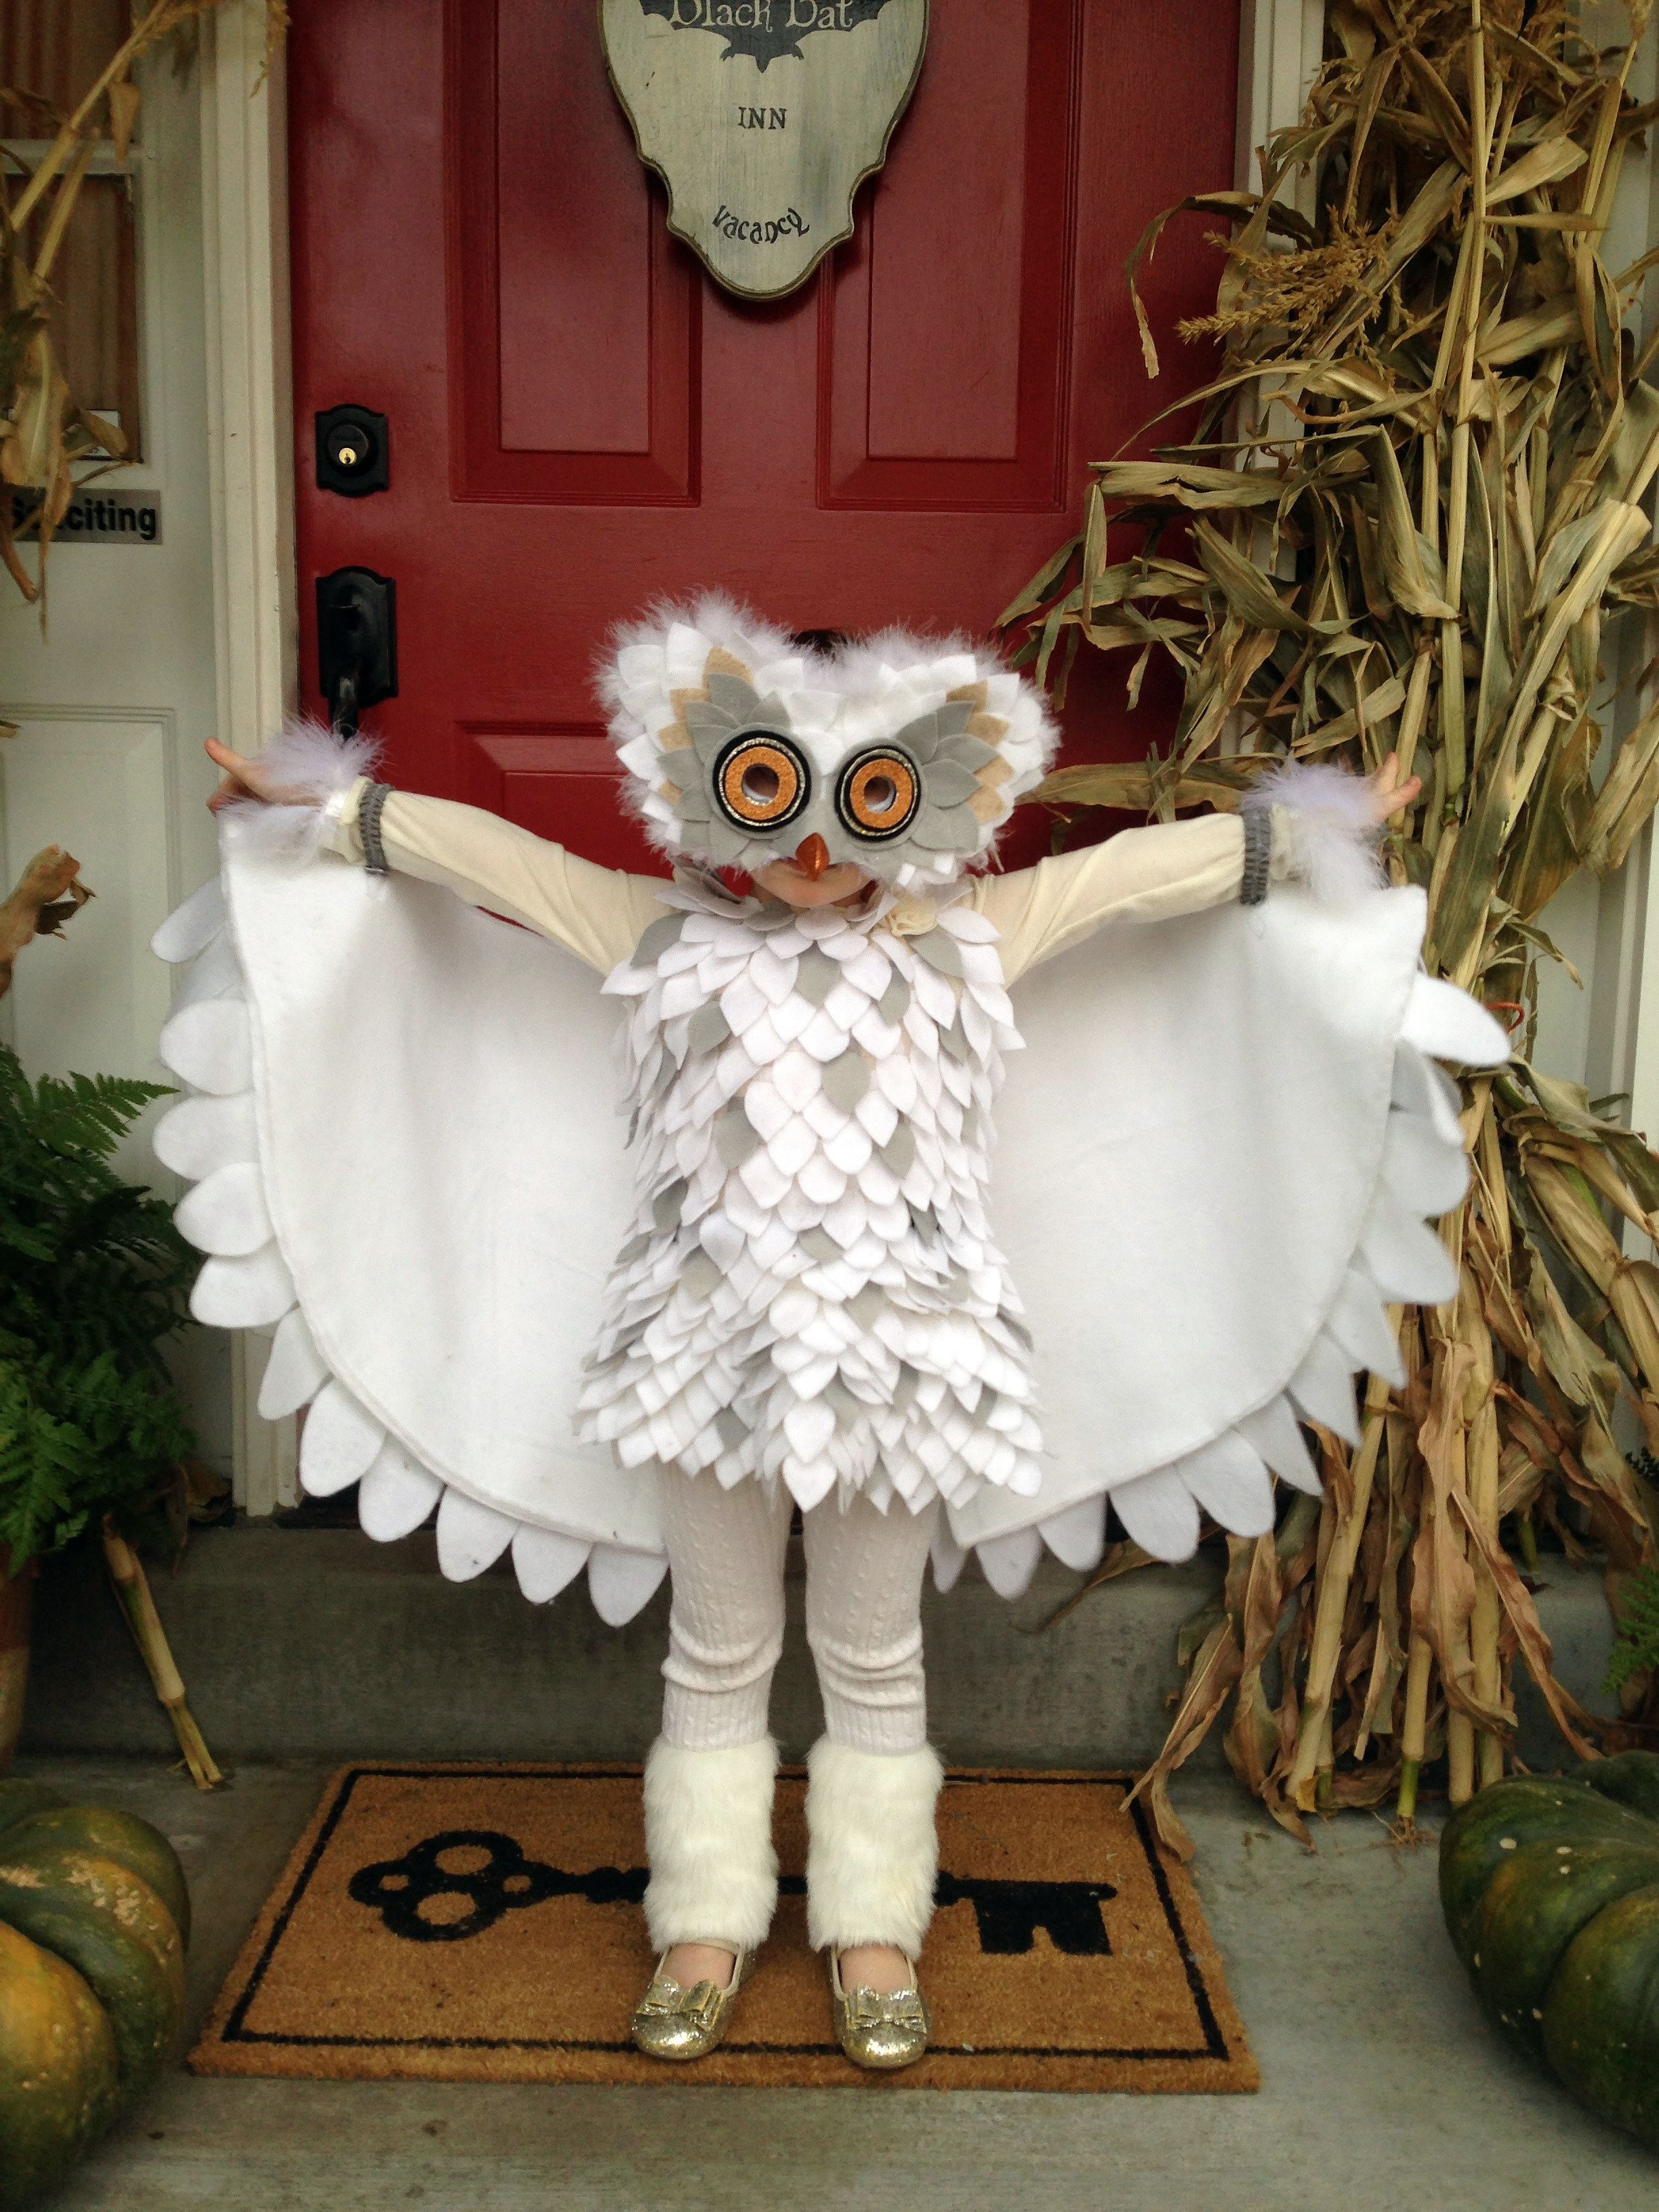 DIY Owl Costumes
 Best 25 Owl costume diy ideas on Pinterest